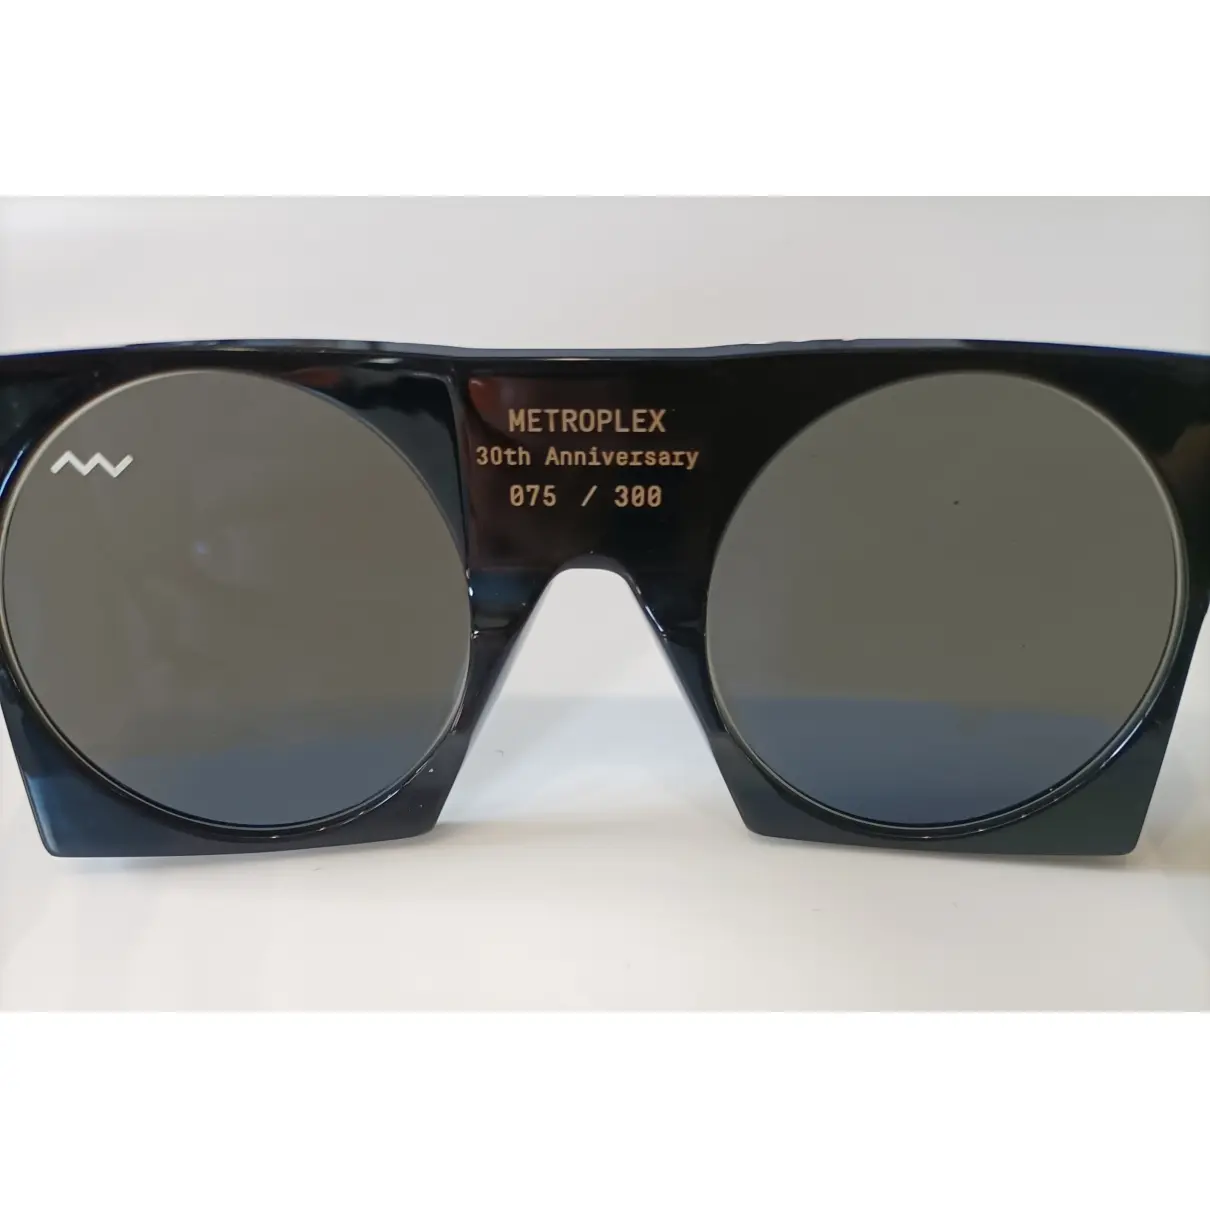 Buy Vava Eyewear Goggle glasses online